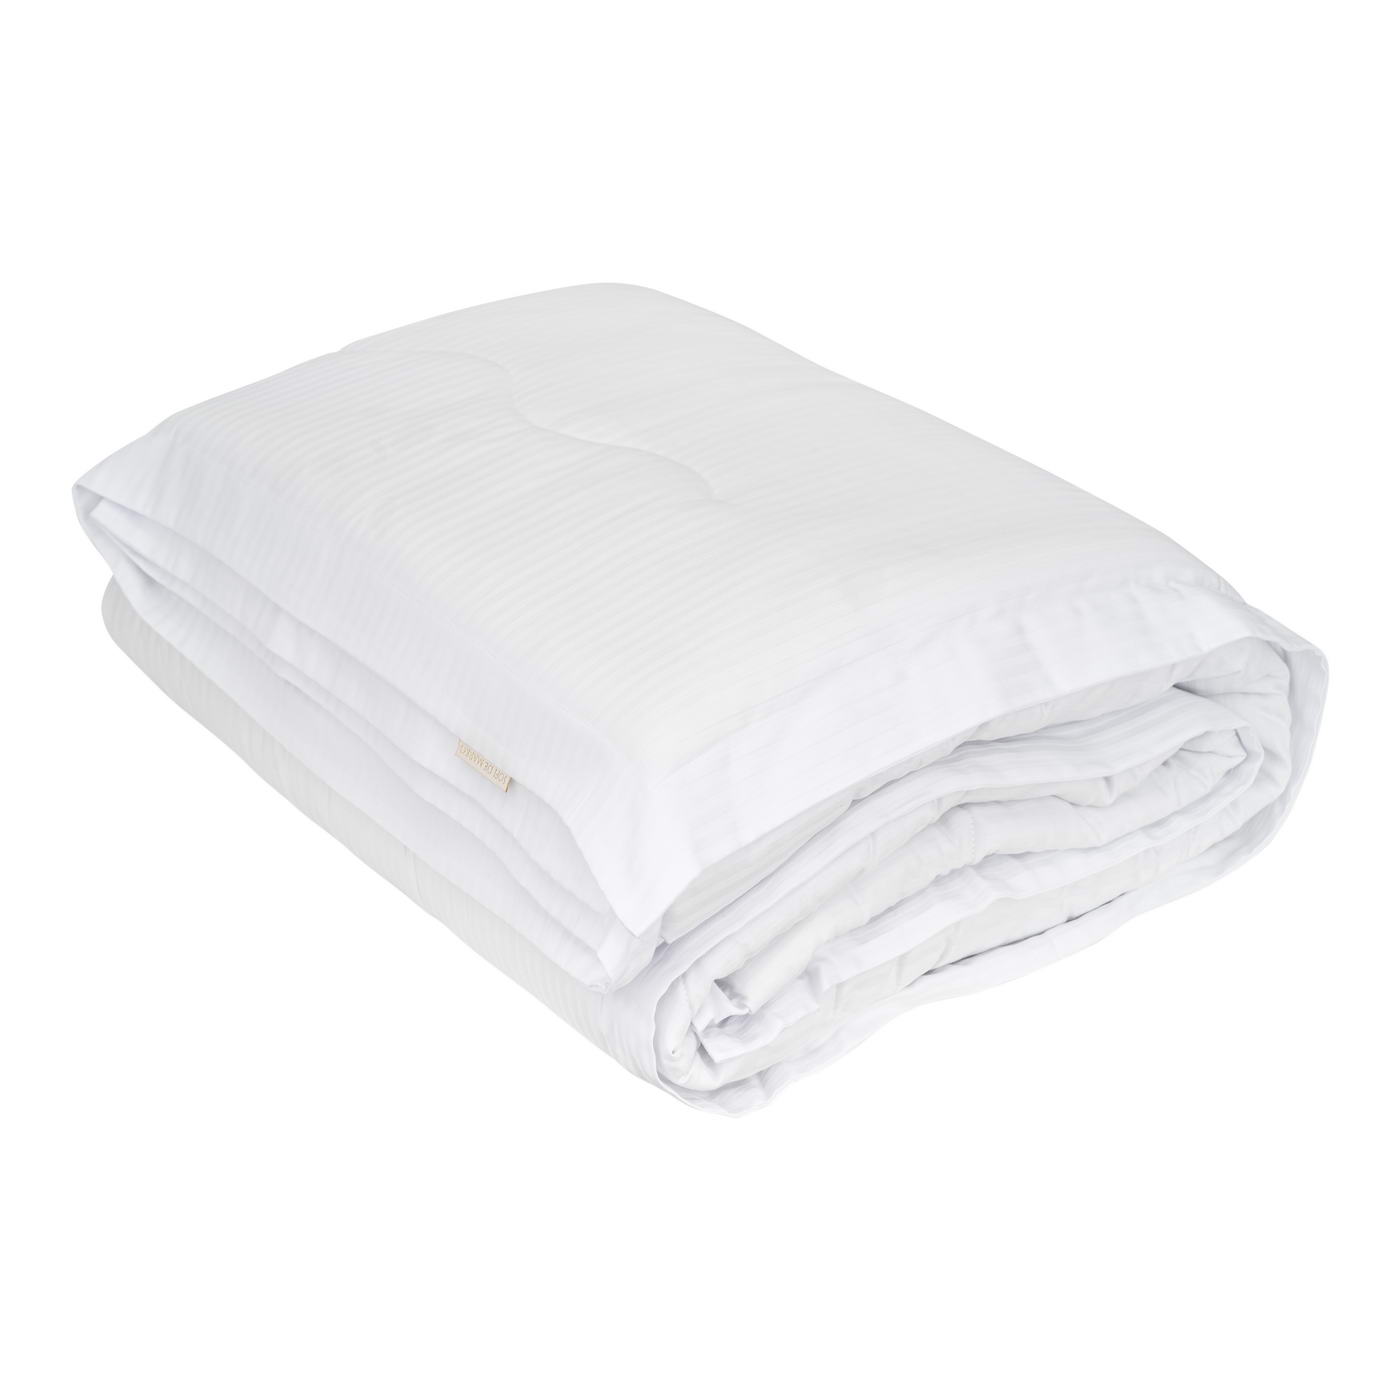 Одеяло Тиффани цвет: белый (195х220 см), размер 195х220 см sofi948677 Одеяло Тиффани цвет: белый (195х220 см) - фото 1